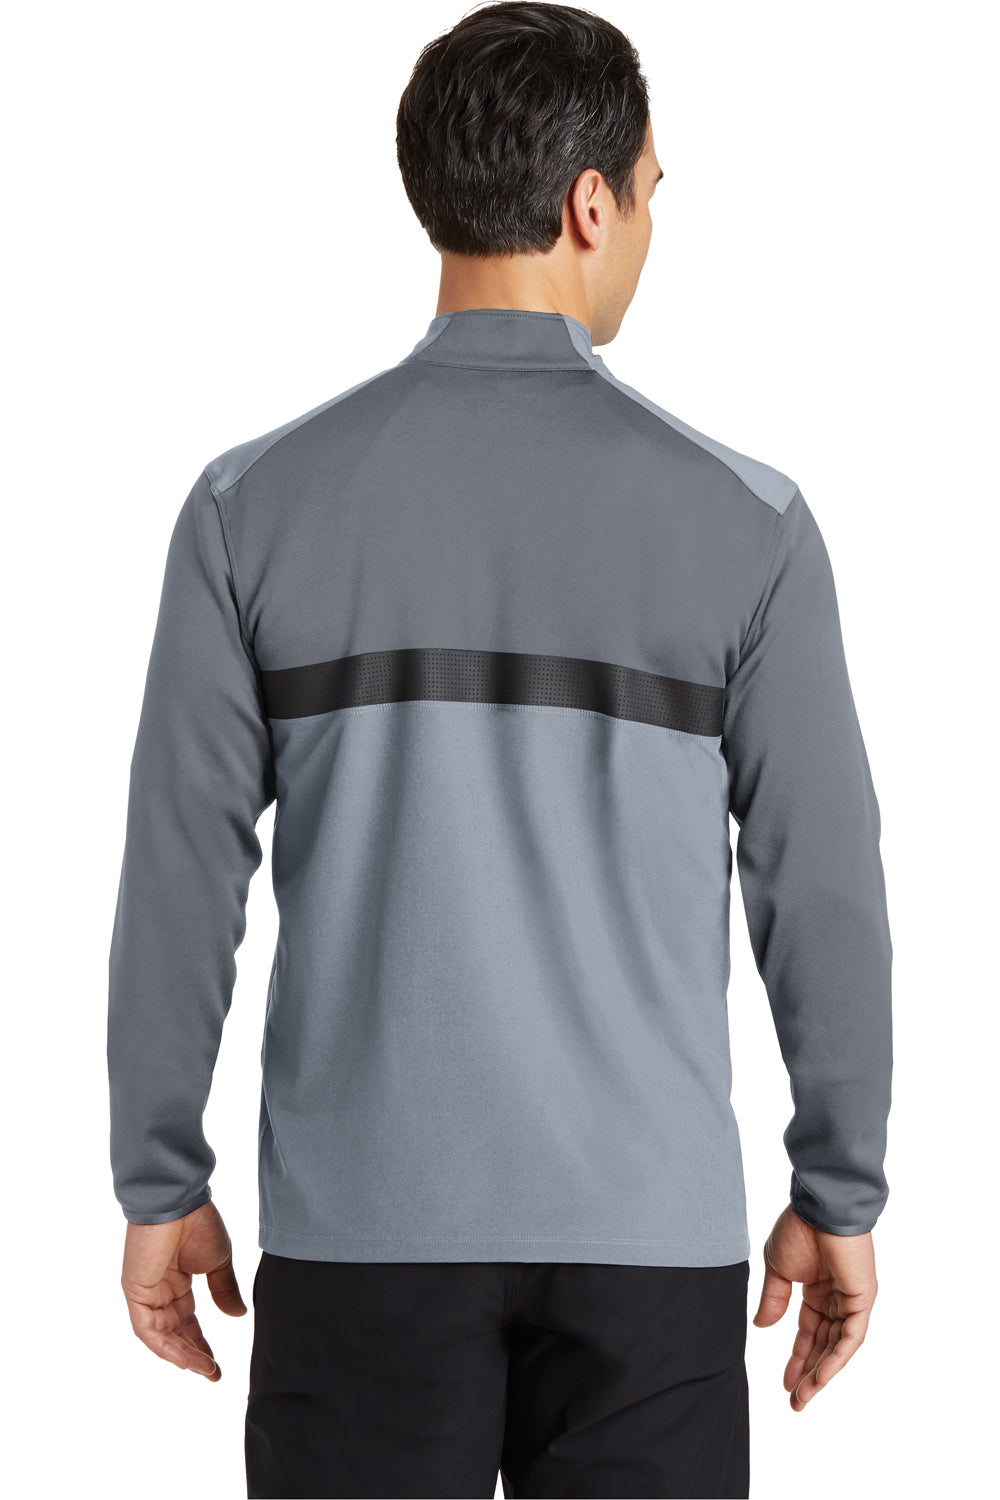 Nike 746102 Mens Dri-Fit Moisture Wicking 1/4 Zip Sweatshirt Cool Grey/Dark Grey Back